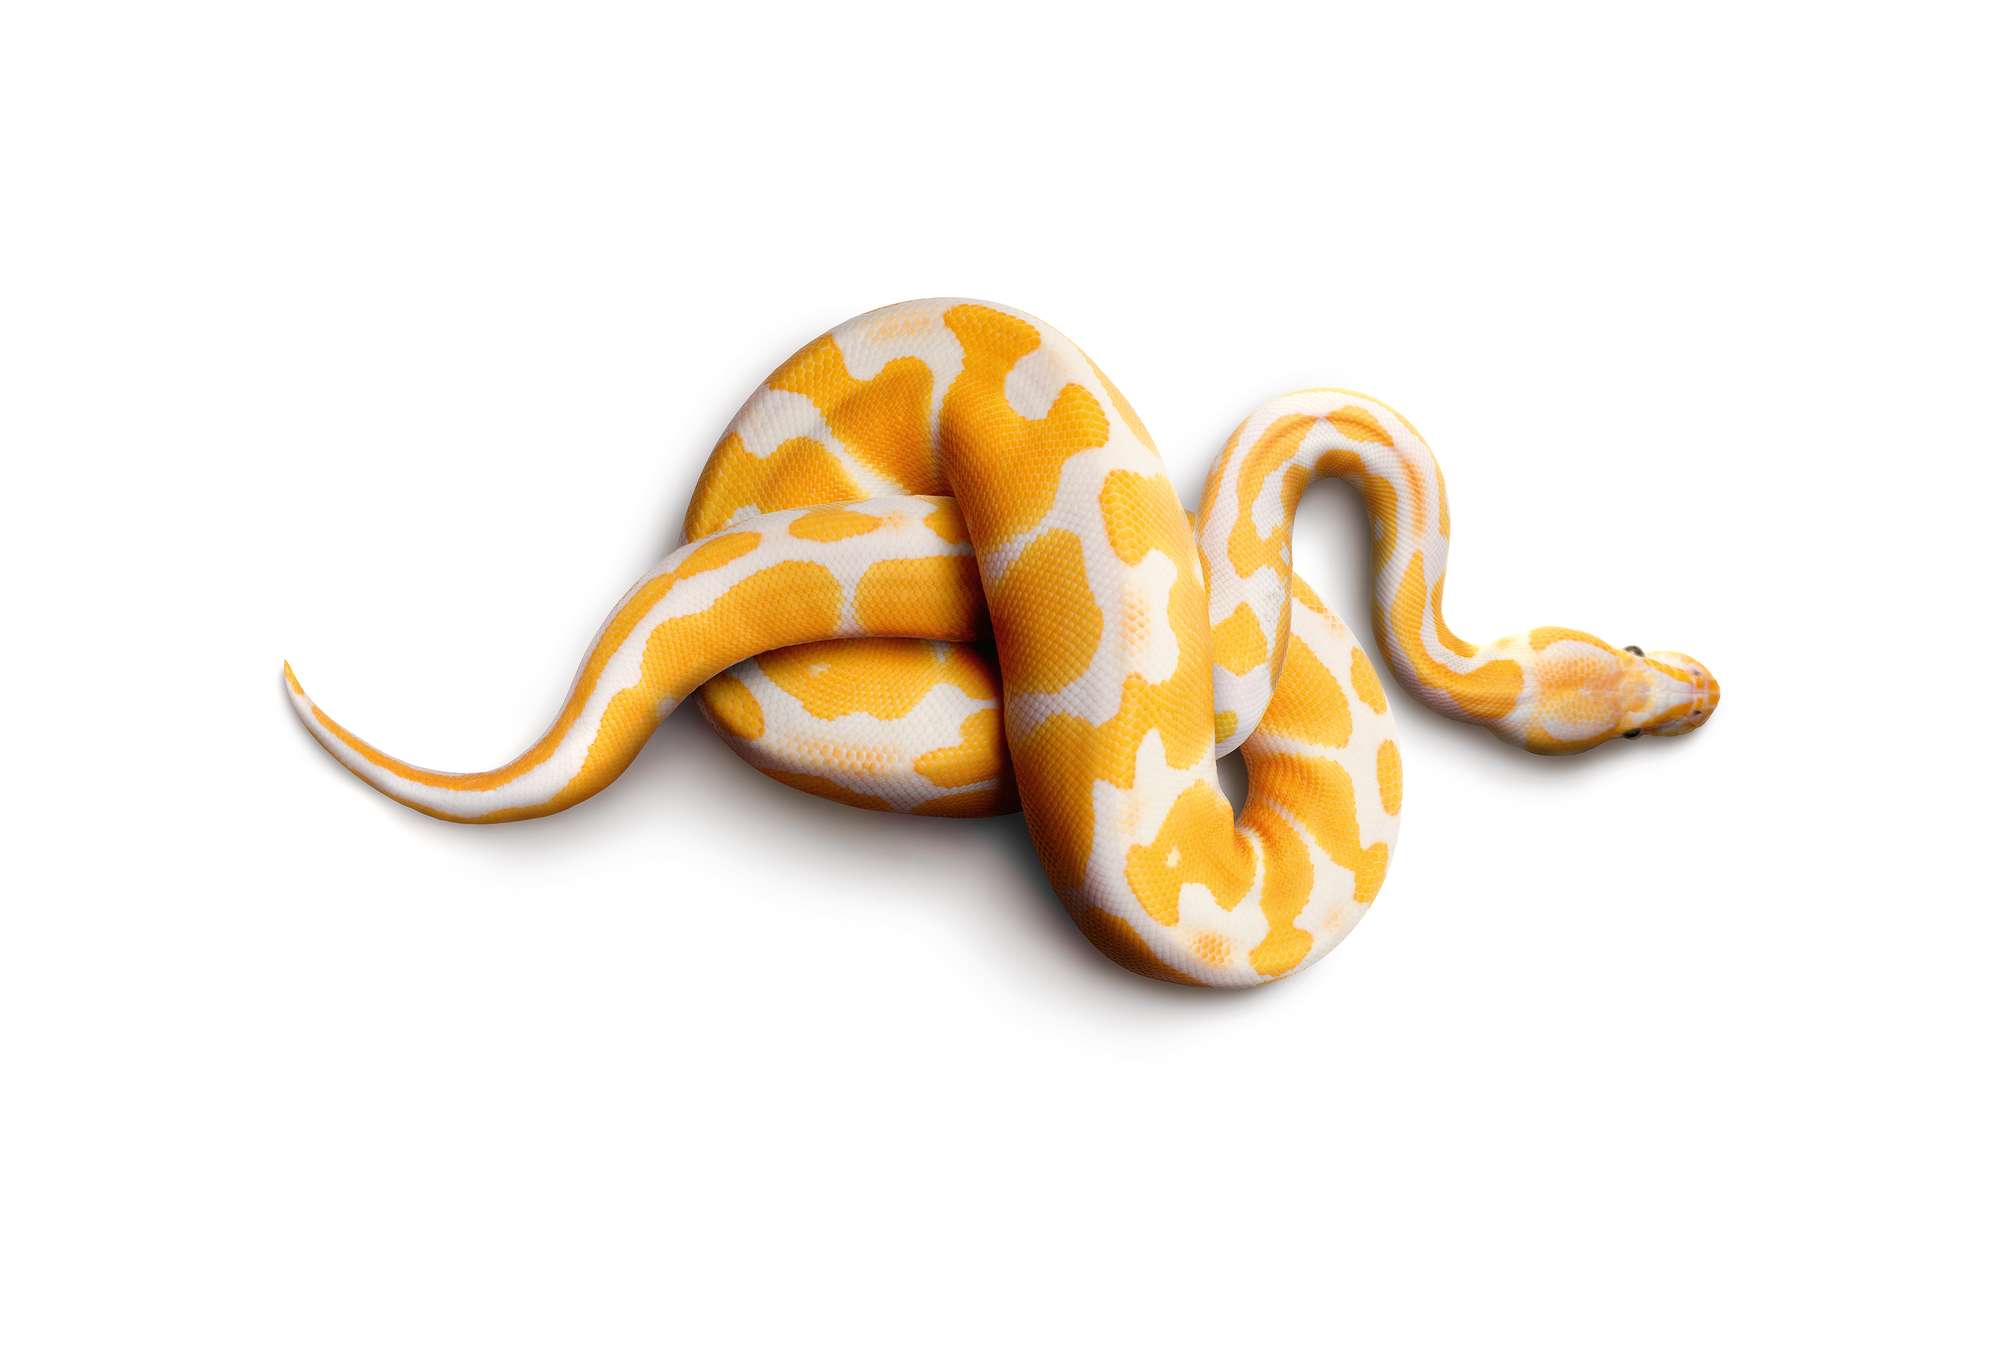             Albino python - fotobehang slang
        